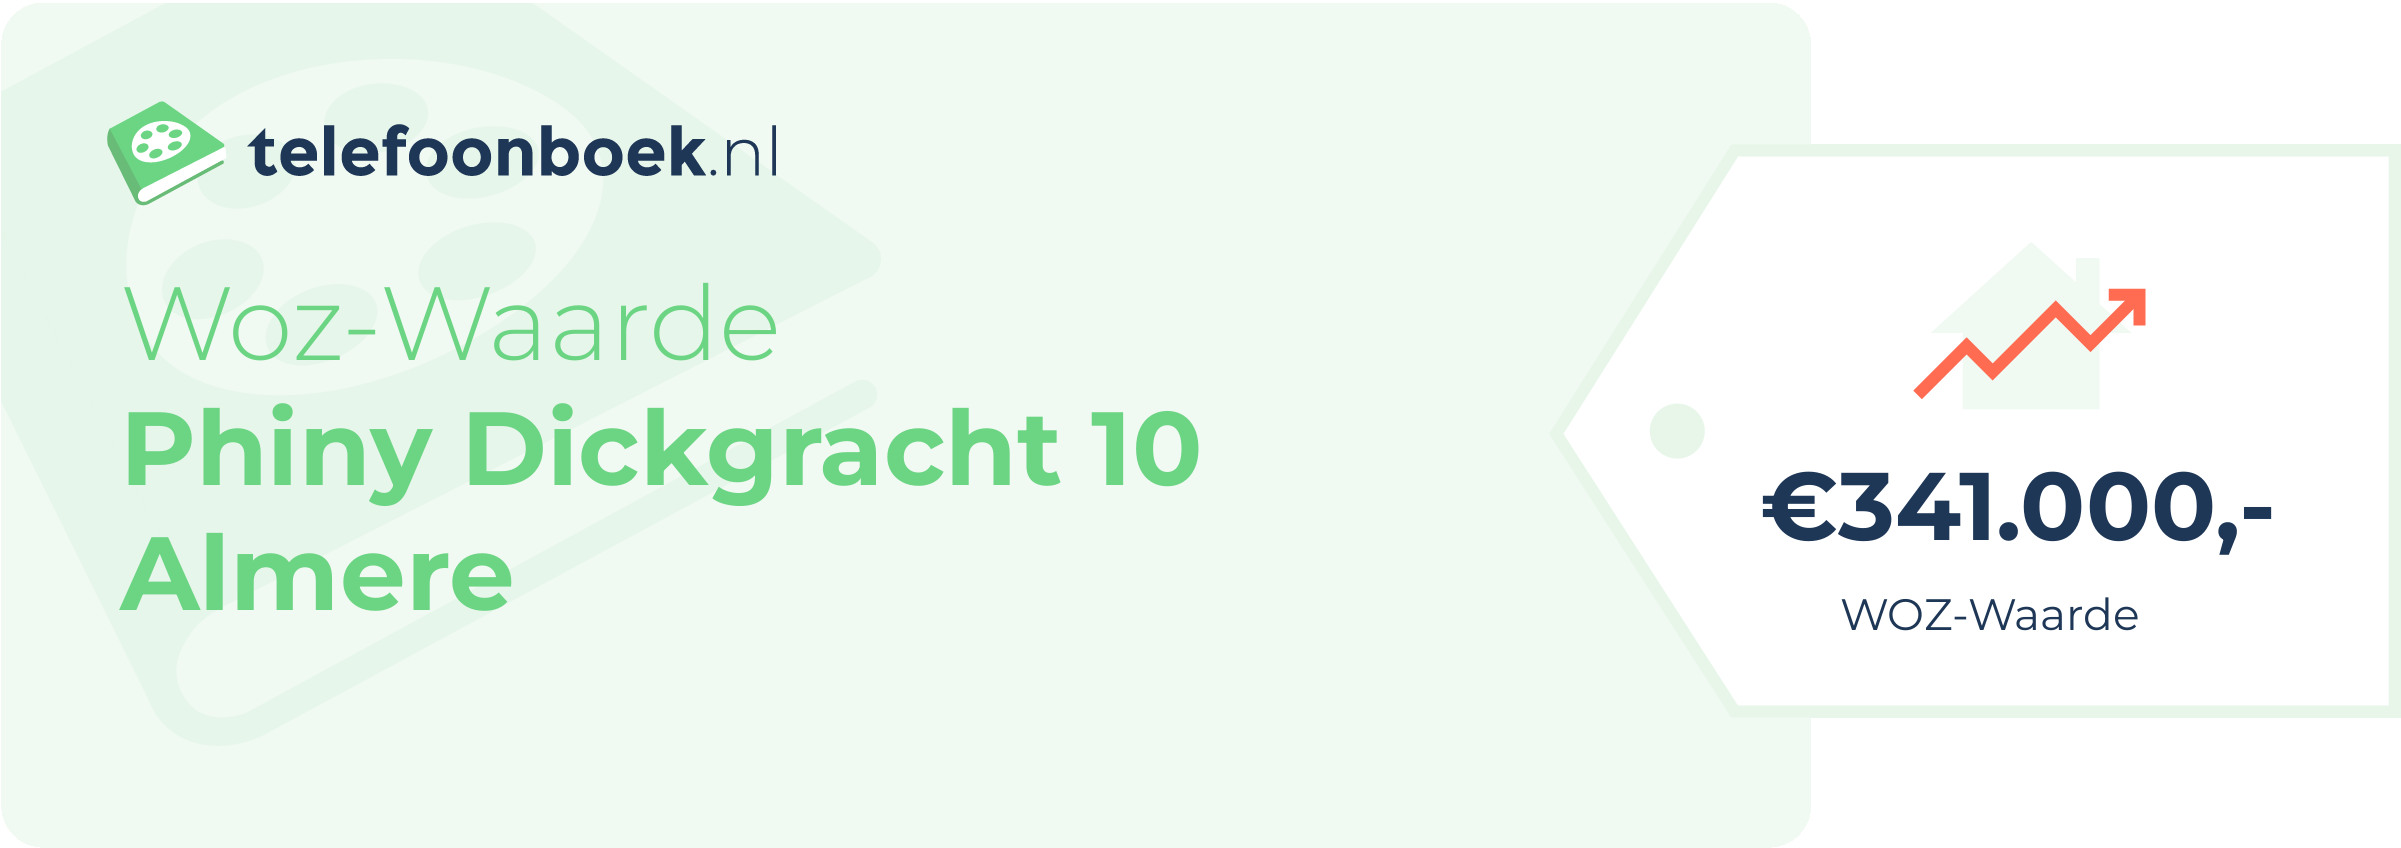 WOZ-waarde Phiny Dickgracht 10 Almere